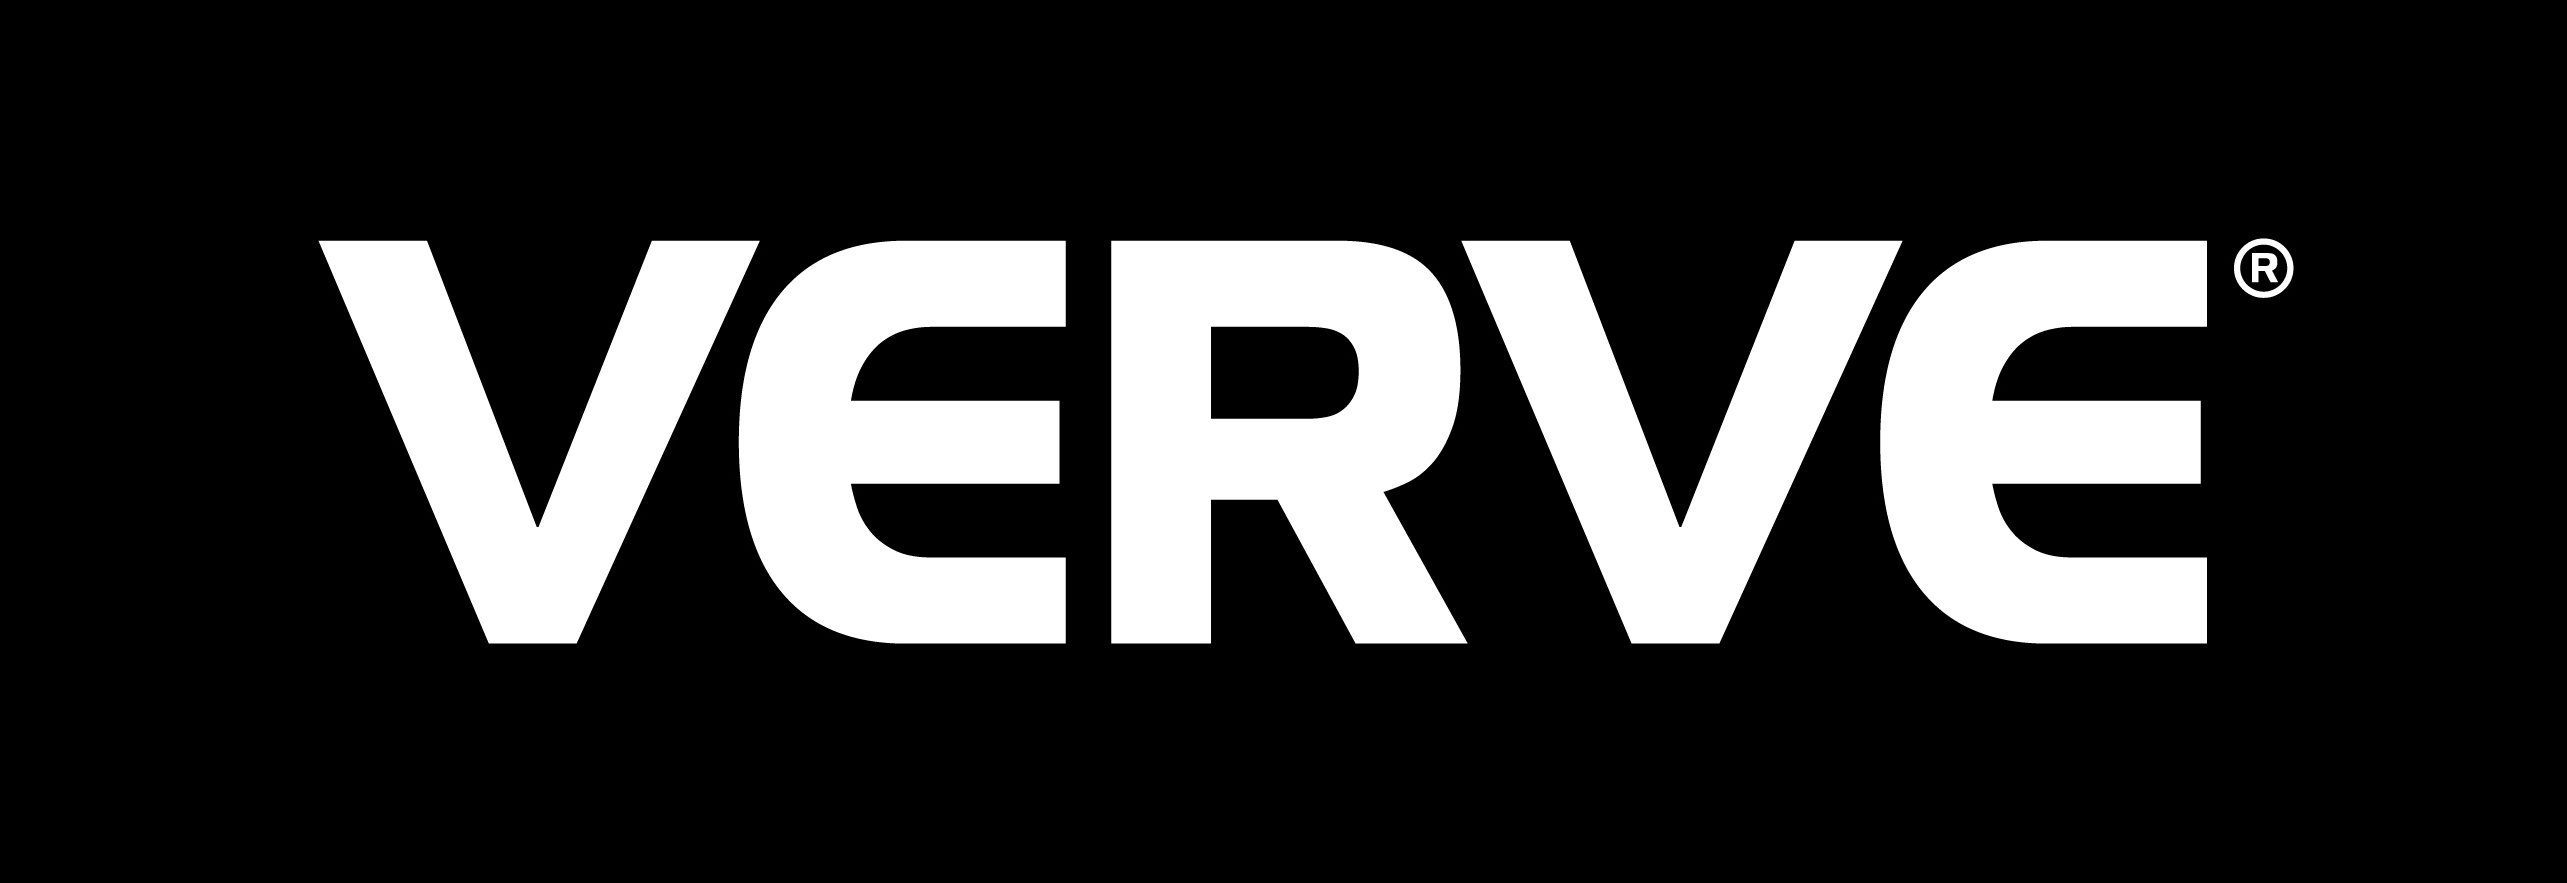 VERVE Fitness  logo